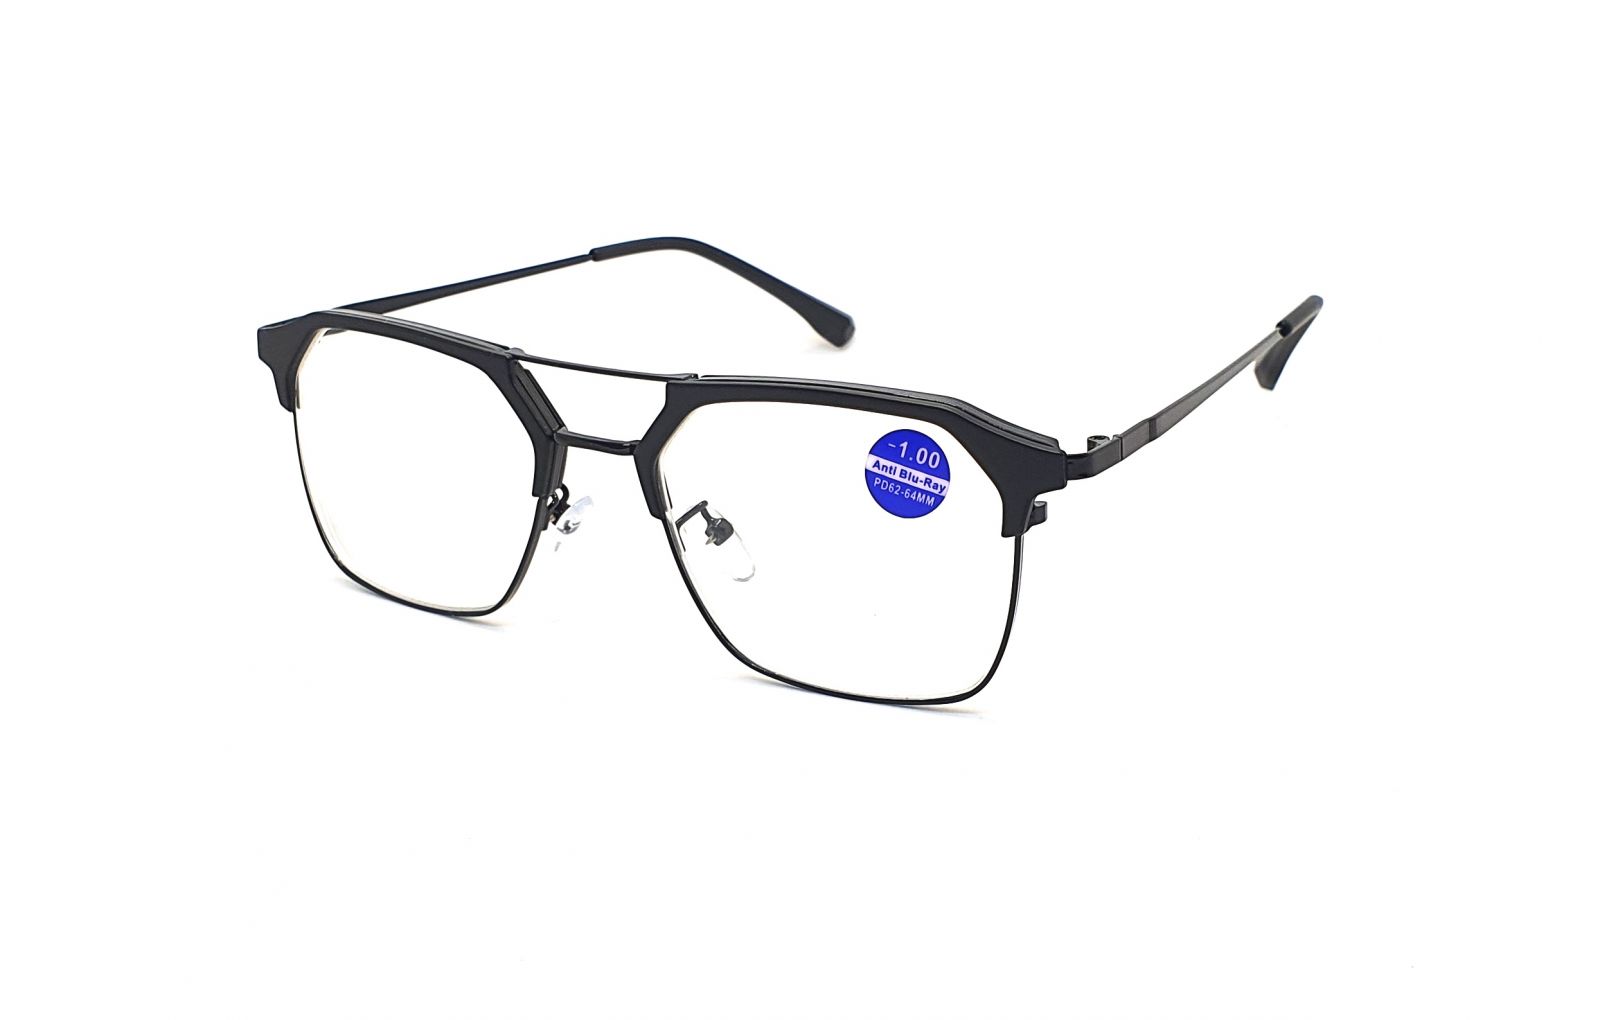 Samozabarvovací dioptrické brýle N06-03 /-1,50